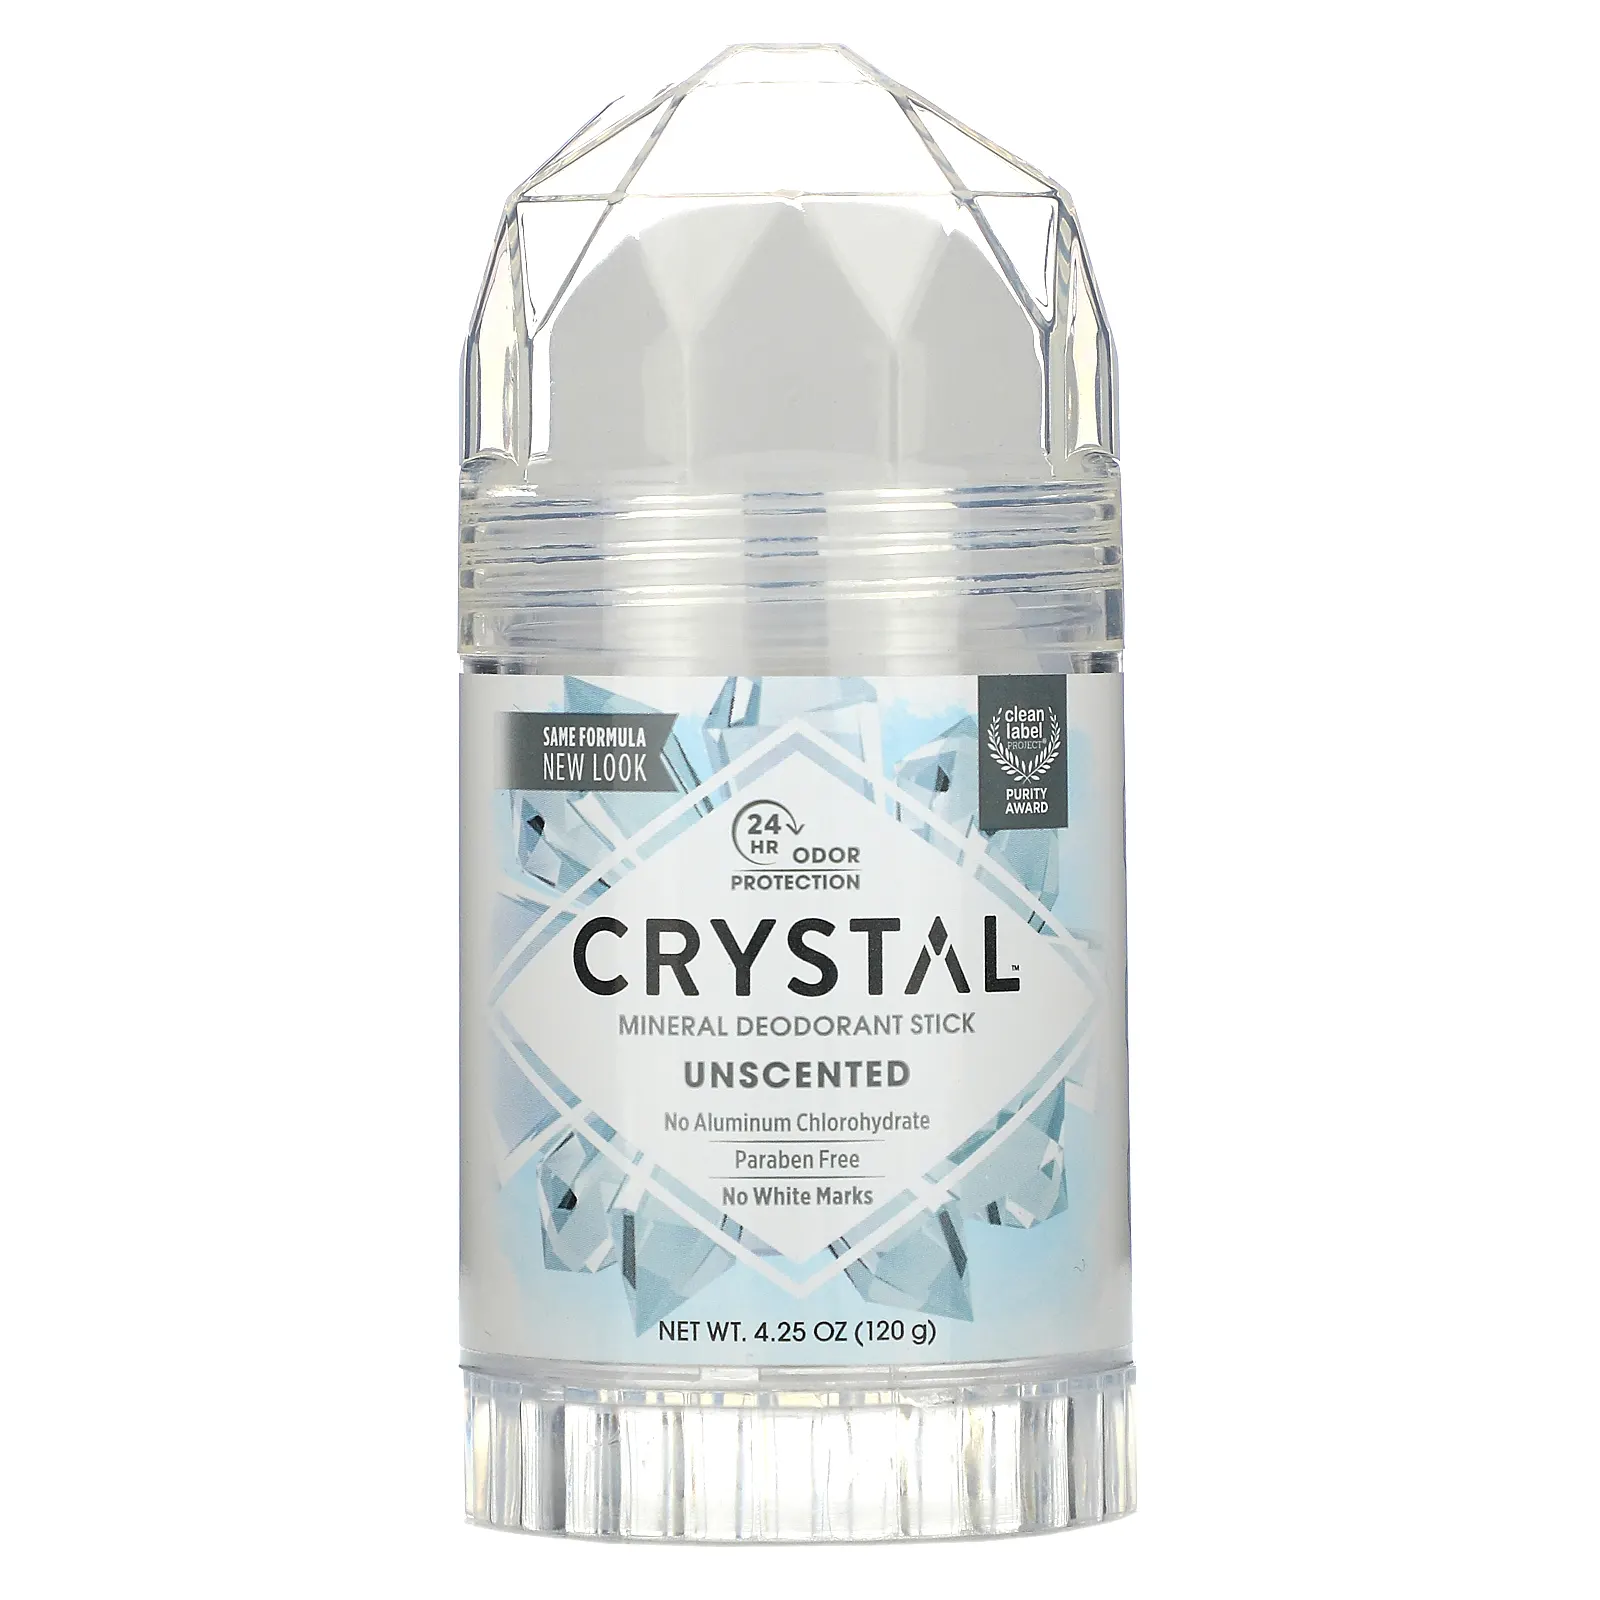 Дезодорант crystal. Дезодорант Mineral Crystal Unscented. Crystal Mineral Deodorant Stick Unscented. Дезодорант Crystal Mineral Deodorant Stick. Crystal body Deodorant Stick 120g.